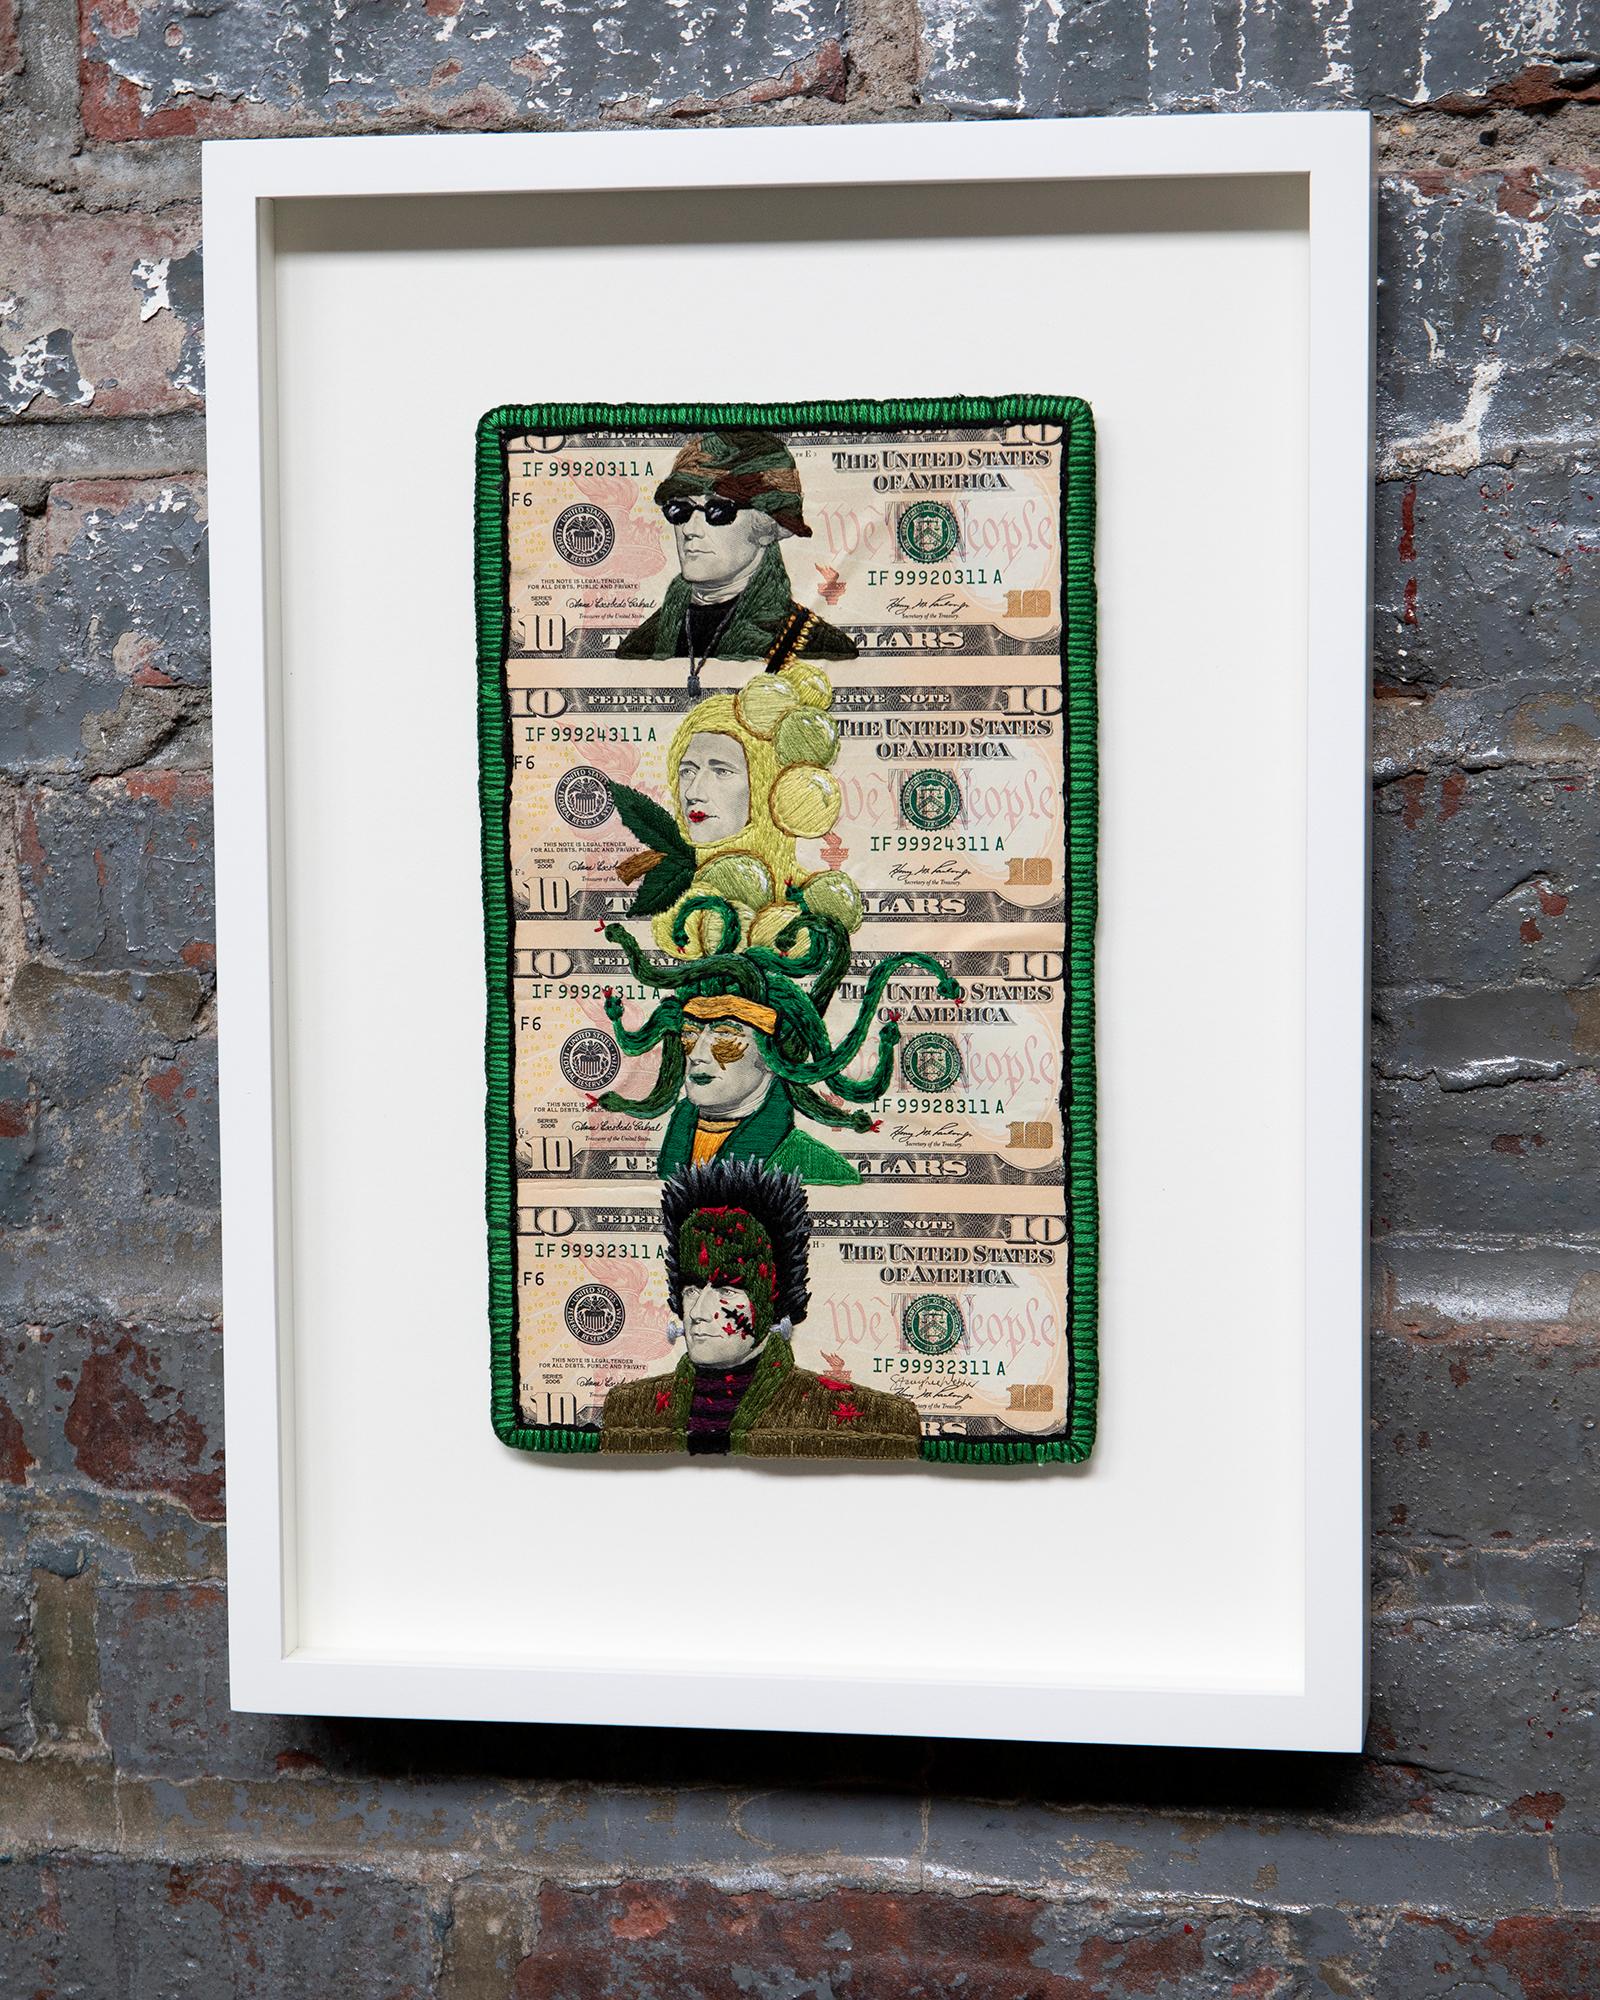 Stacey Lee Webber

Rainbow Costumes: Green Hamilton

15.75” x 11.5” 

handstitched cotton thread, uncut 1x4 US ten dollar bills, framed, glass face

2022